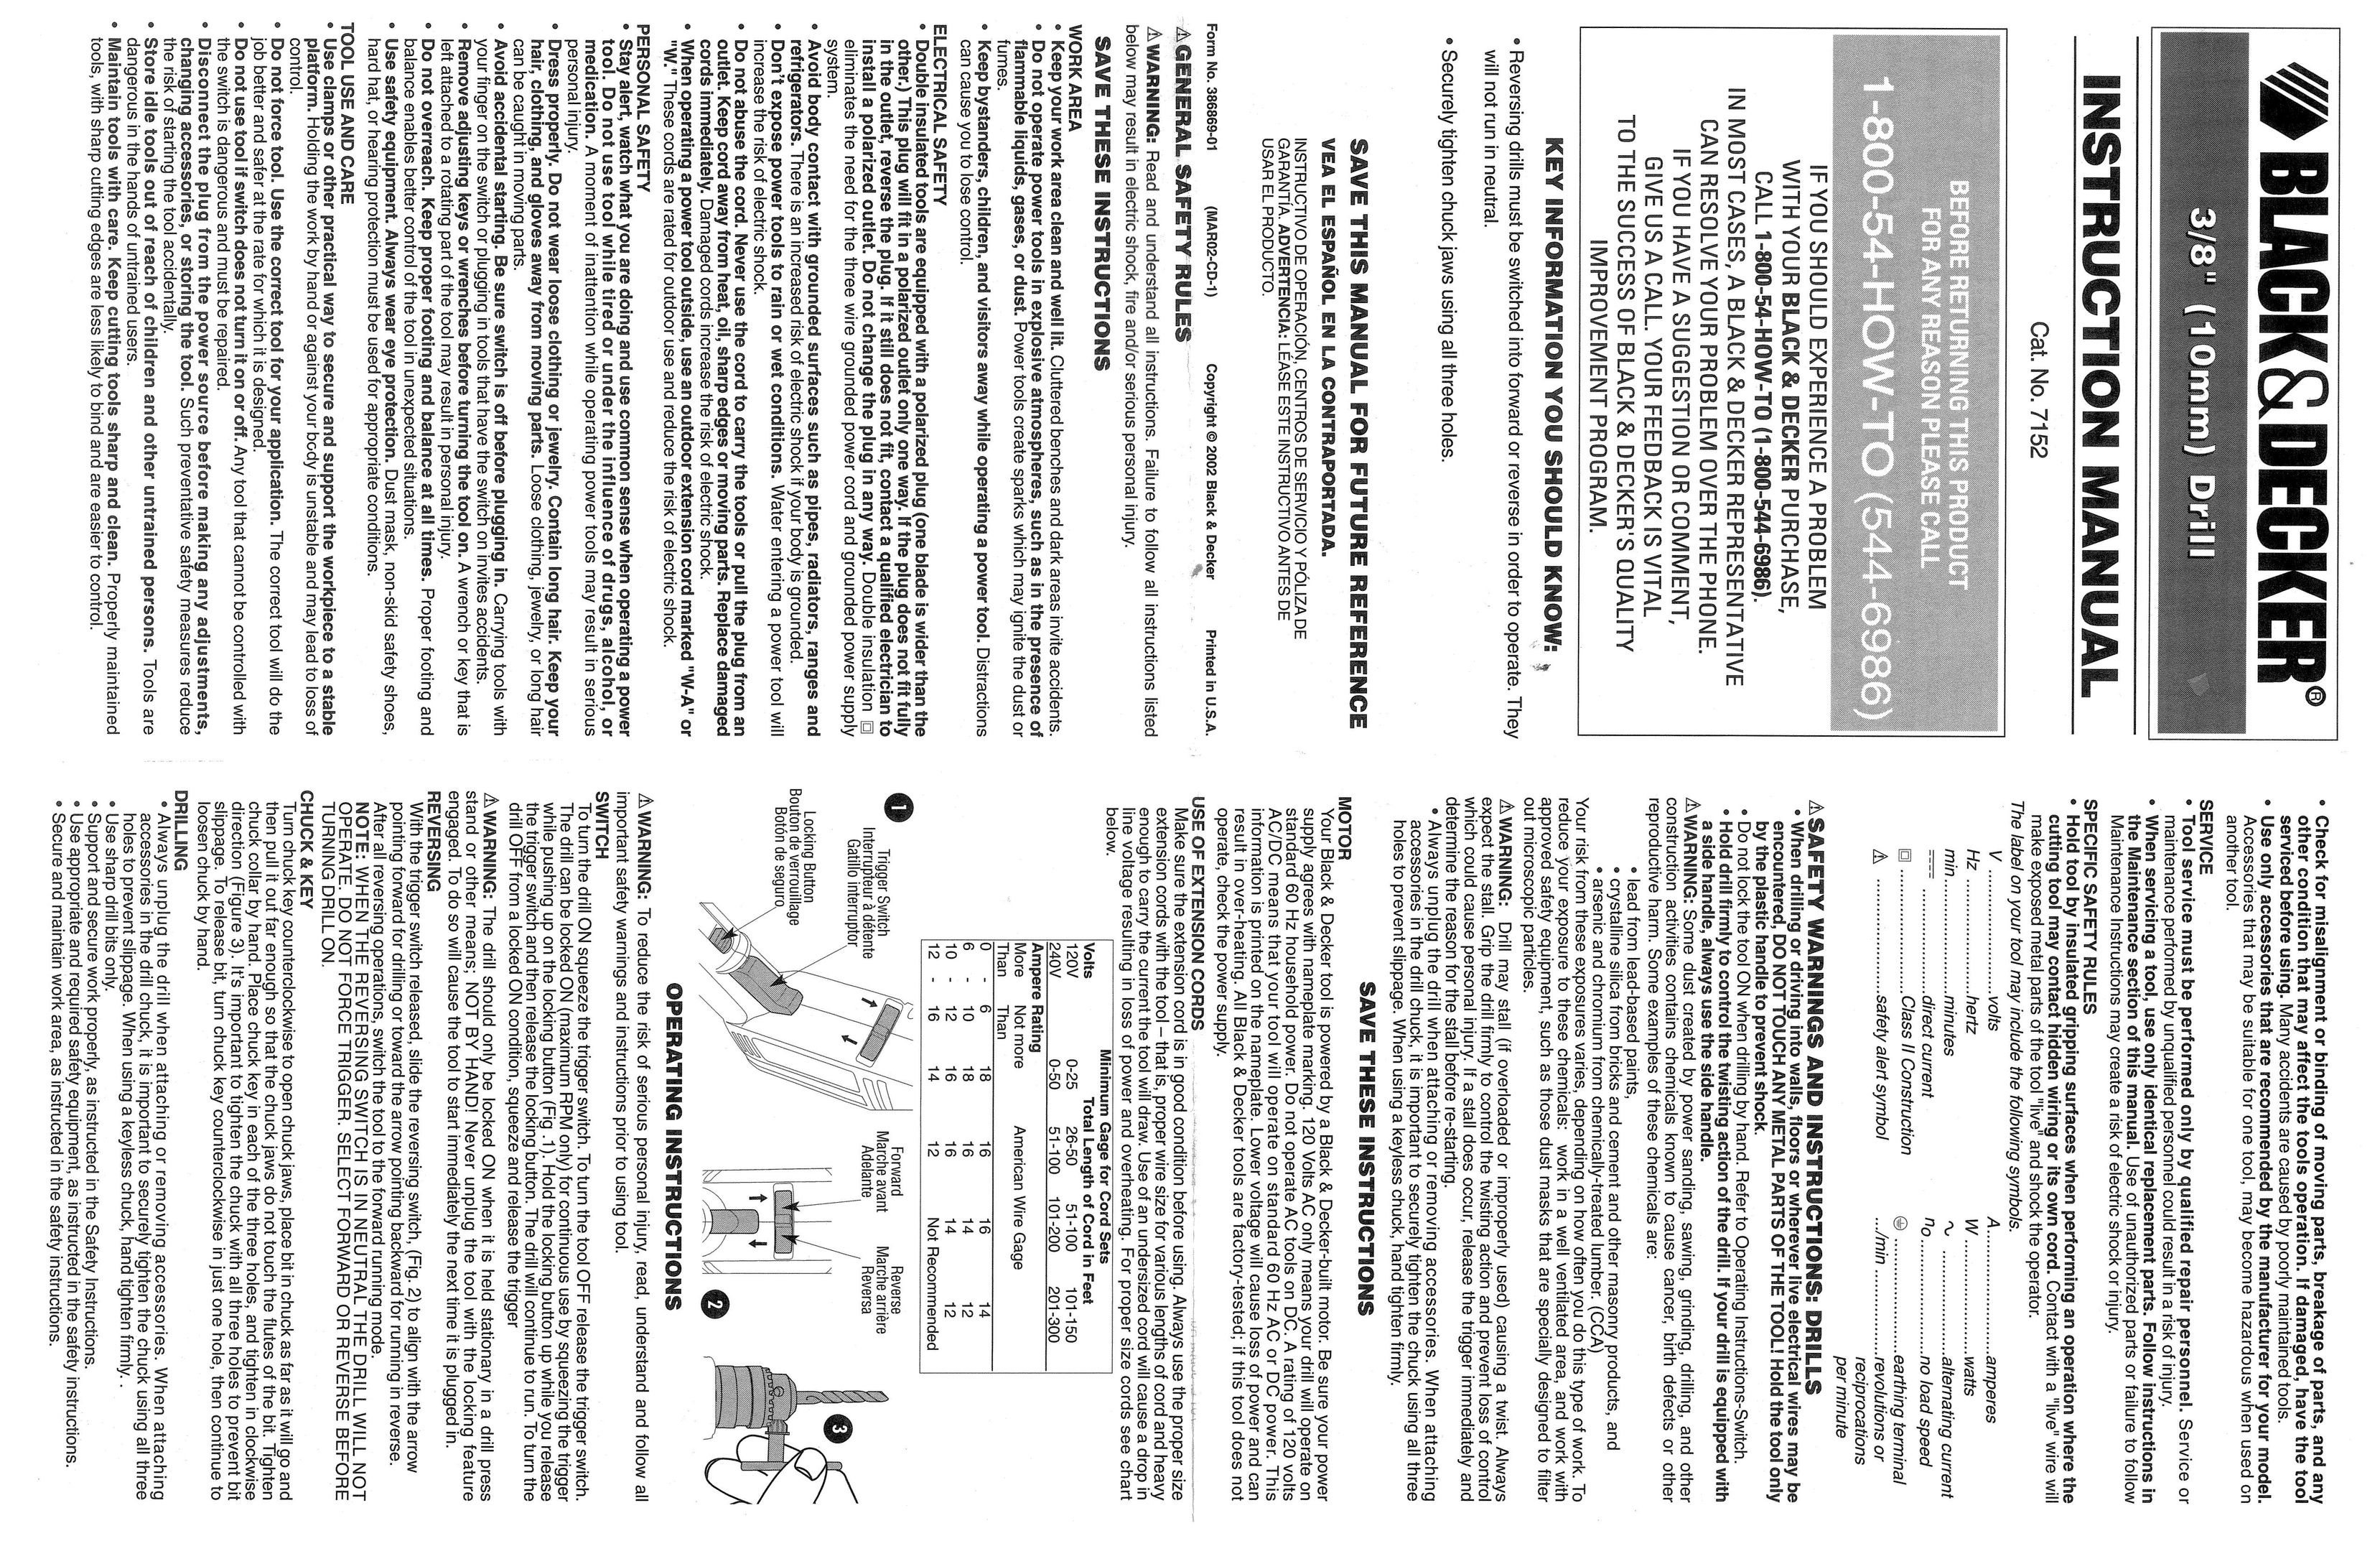 Black & Decker 386869-01 Drill User Manual